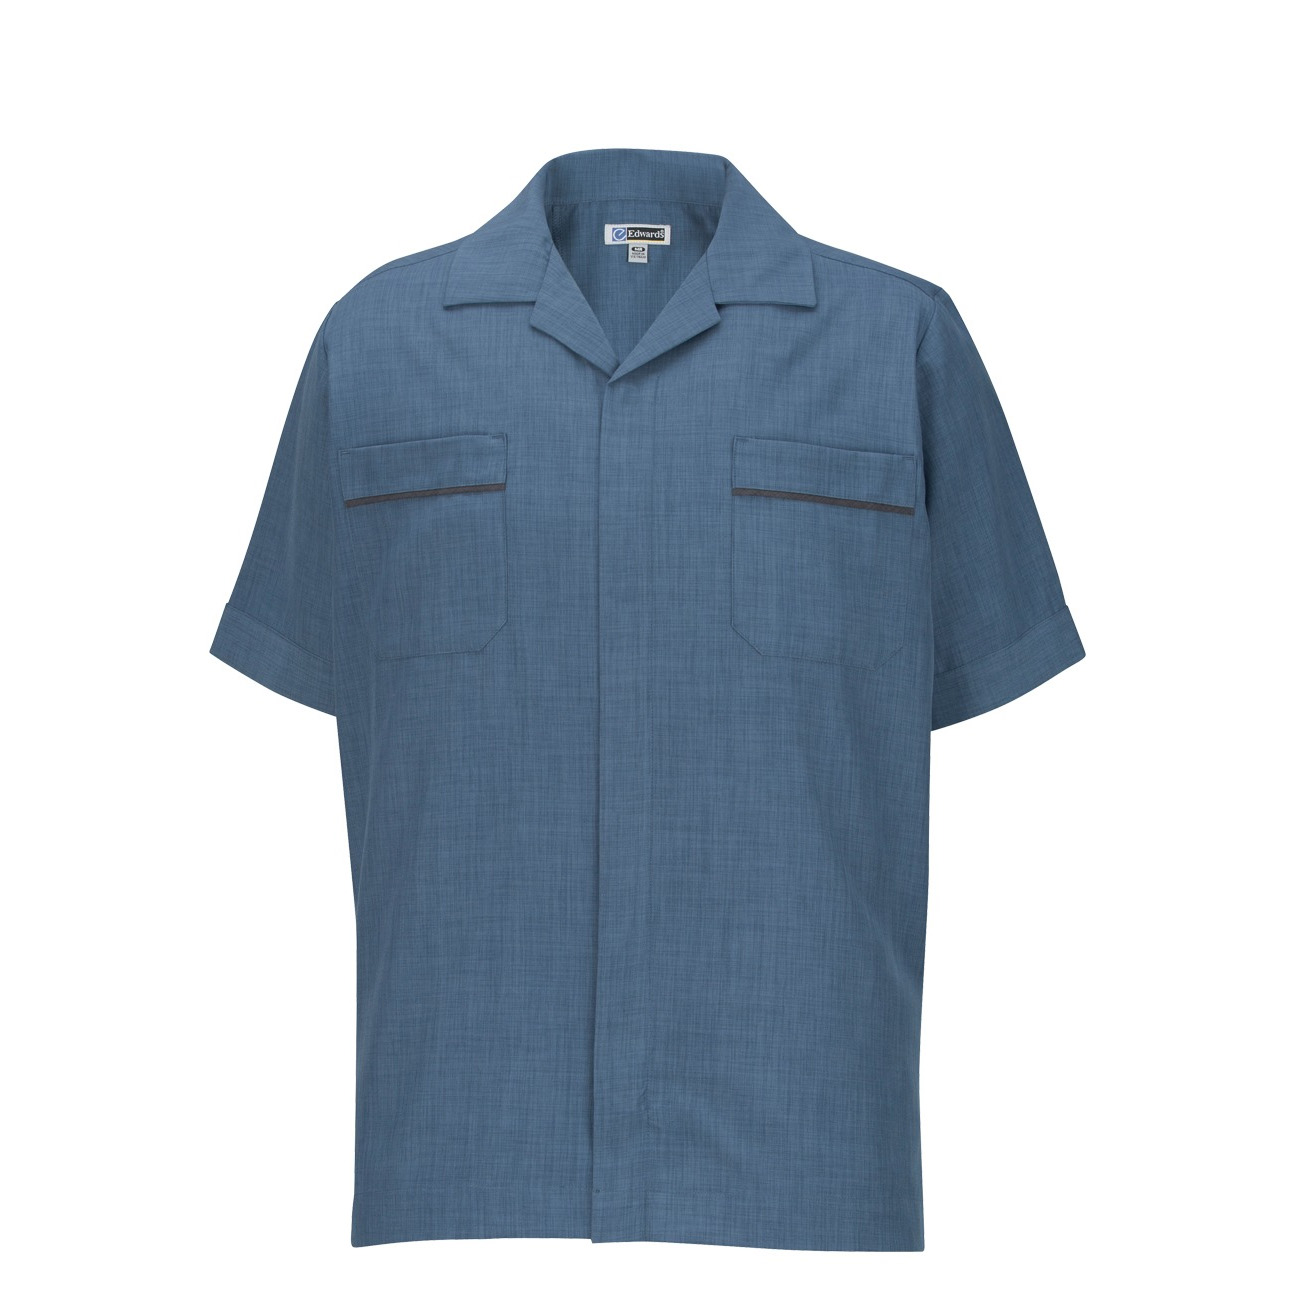 Men's Pinnacle Service Shirt - Ramy Hill